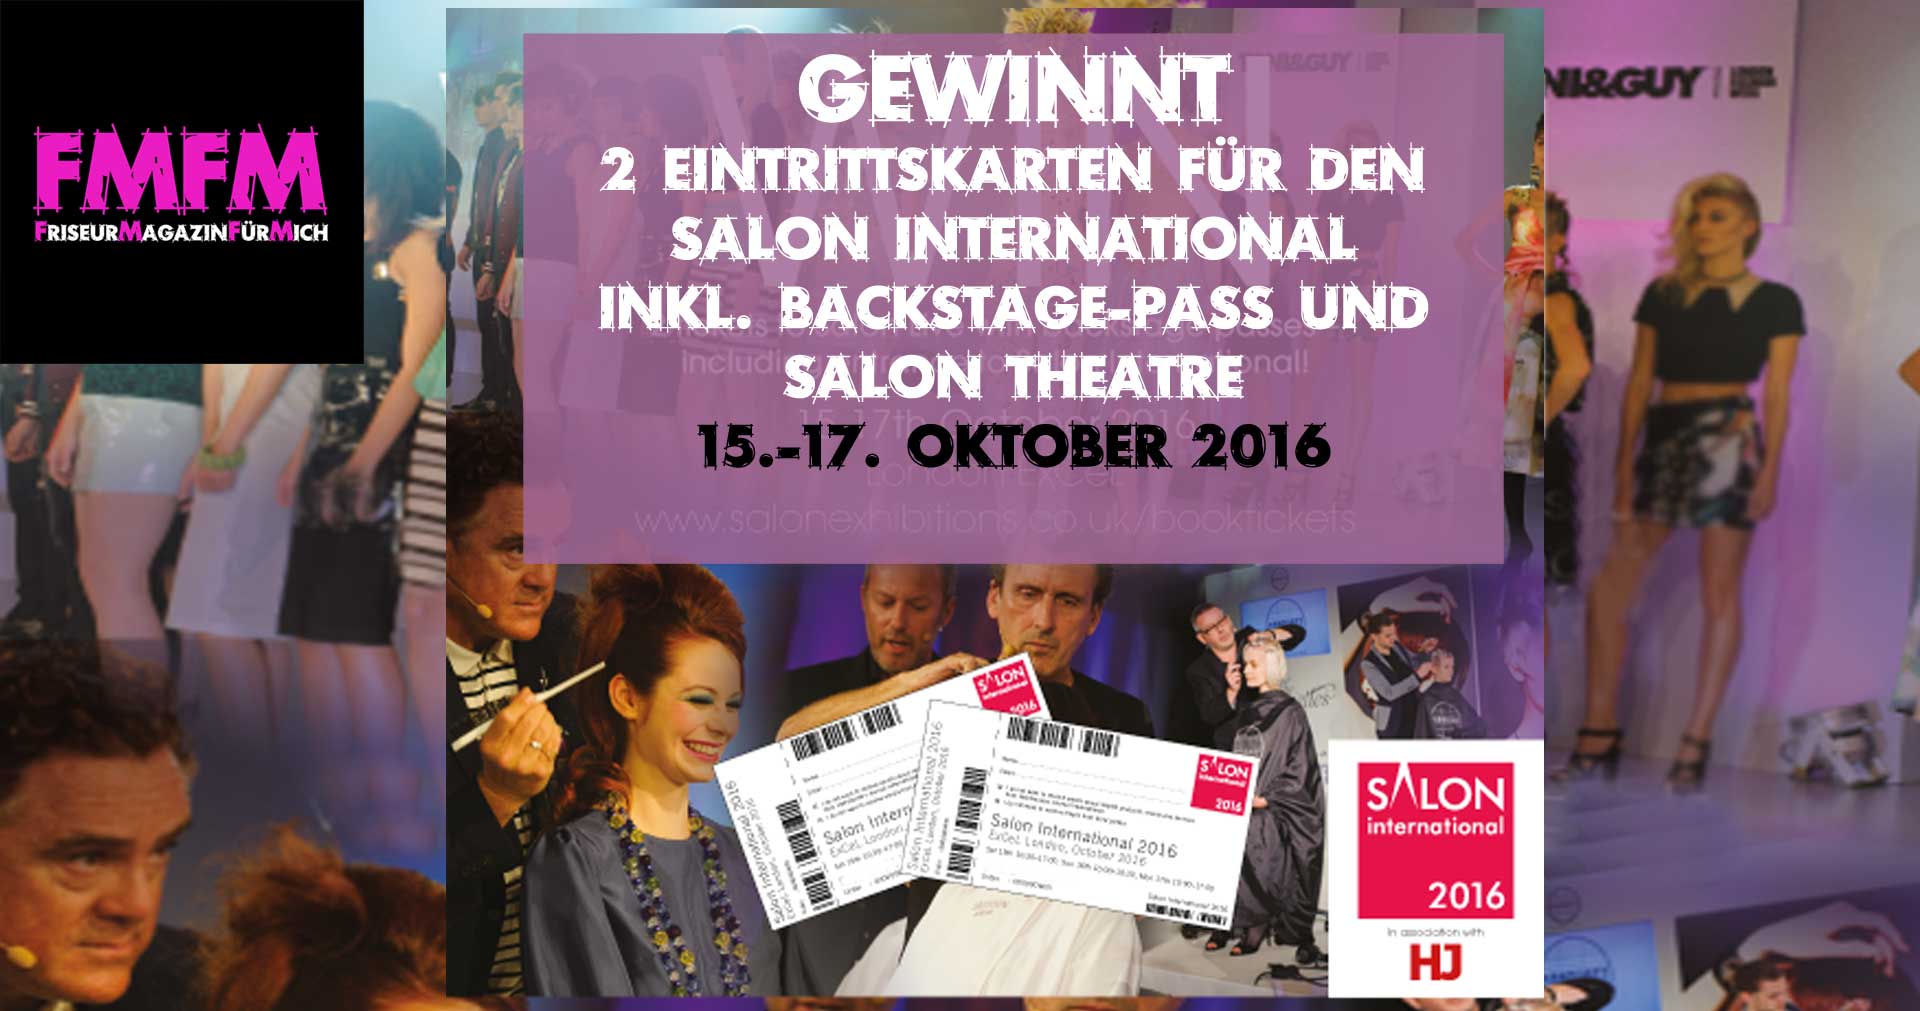 Gewinnt-bei-uns-Tickets-fuer-den-Salon-International-1409-1